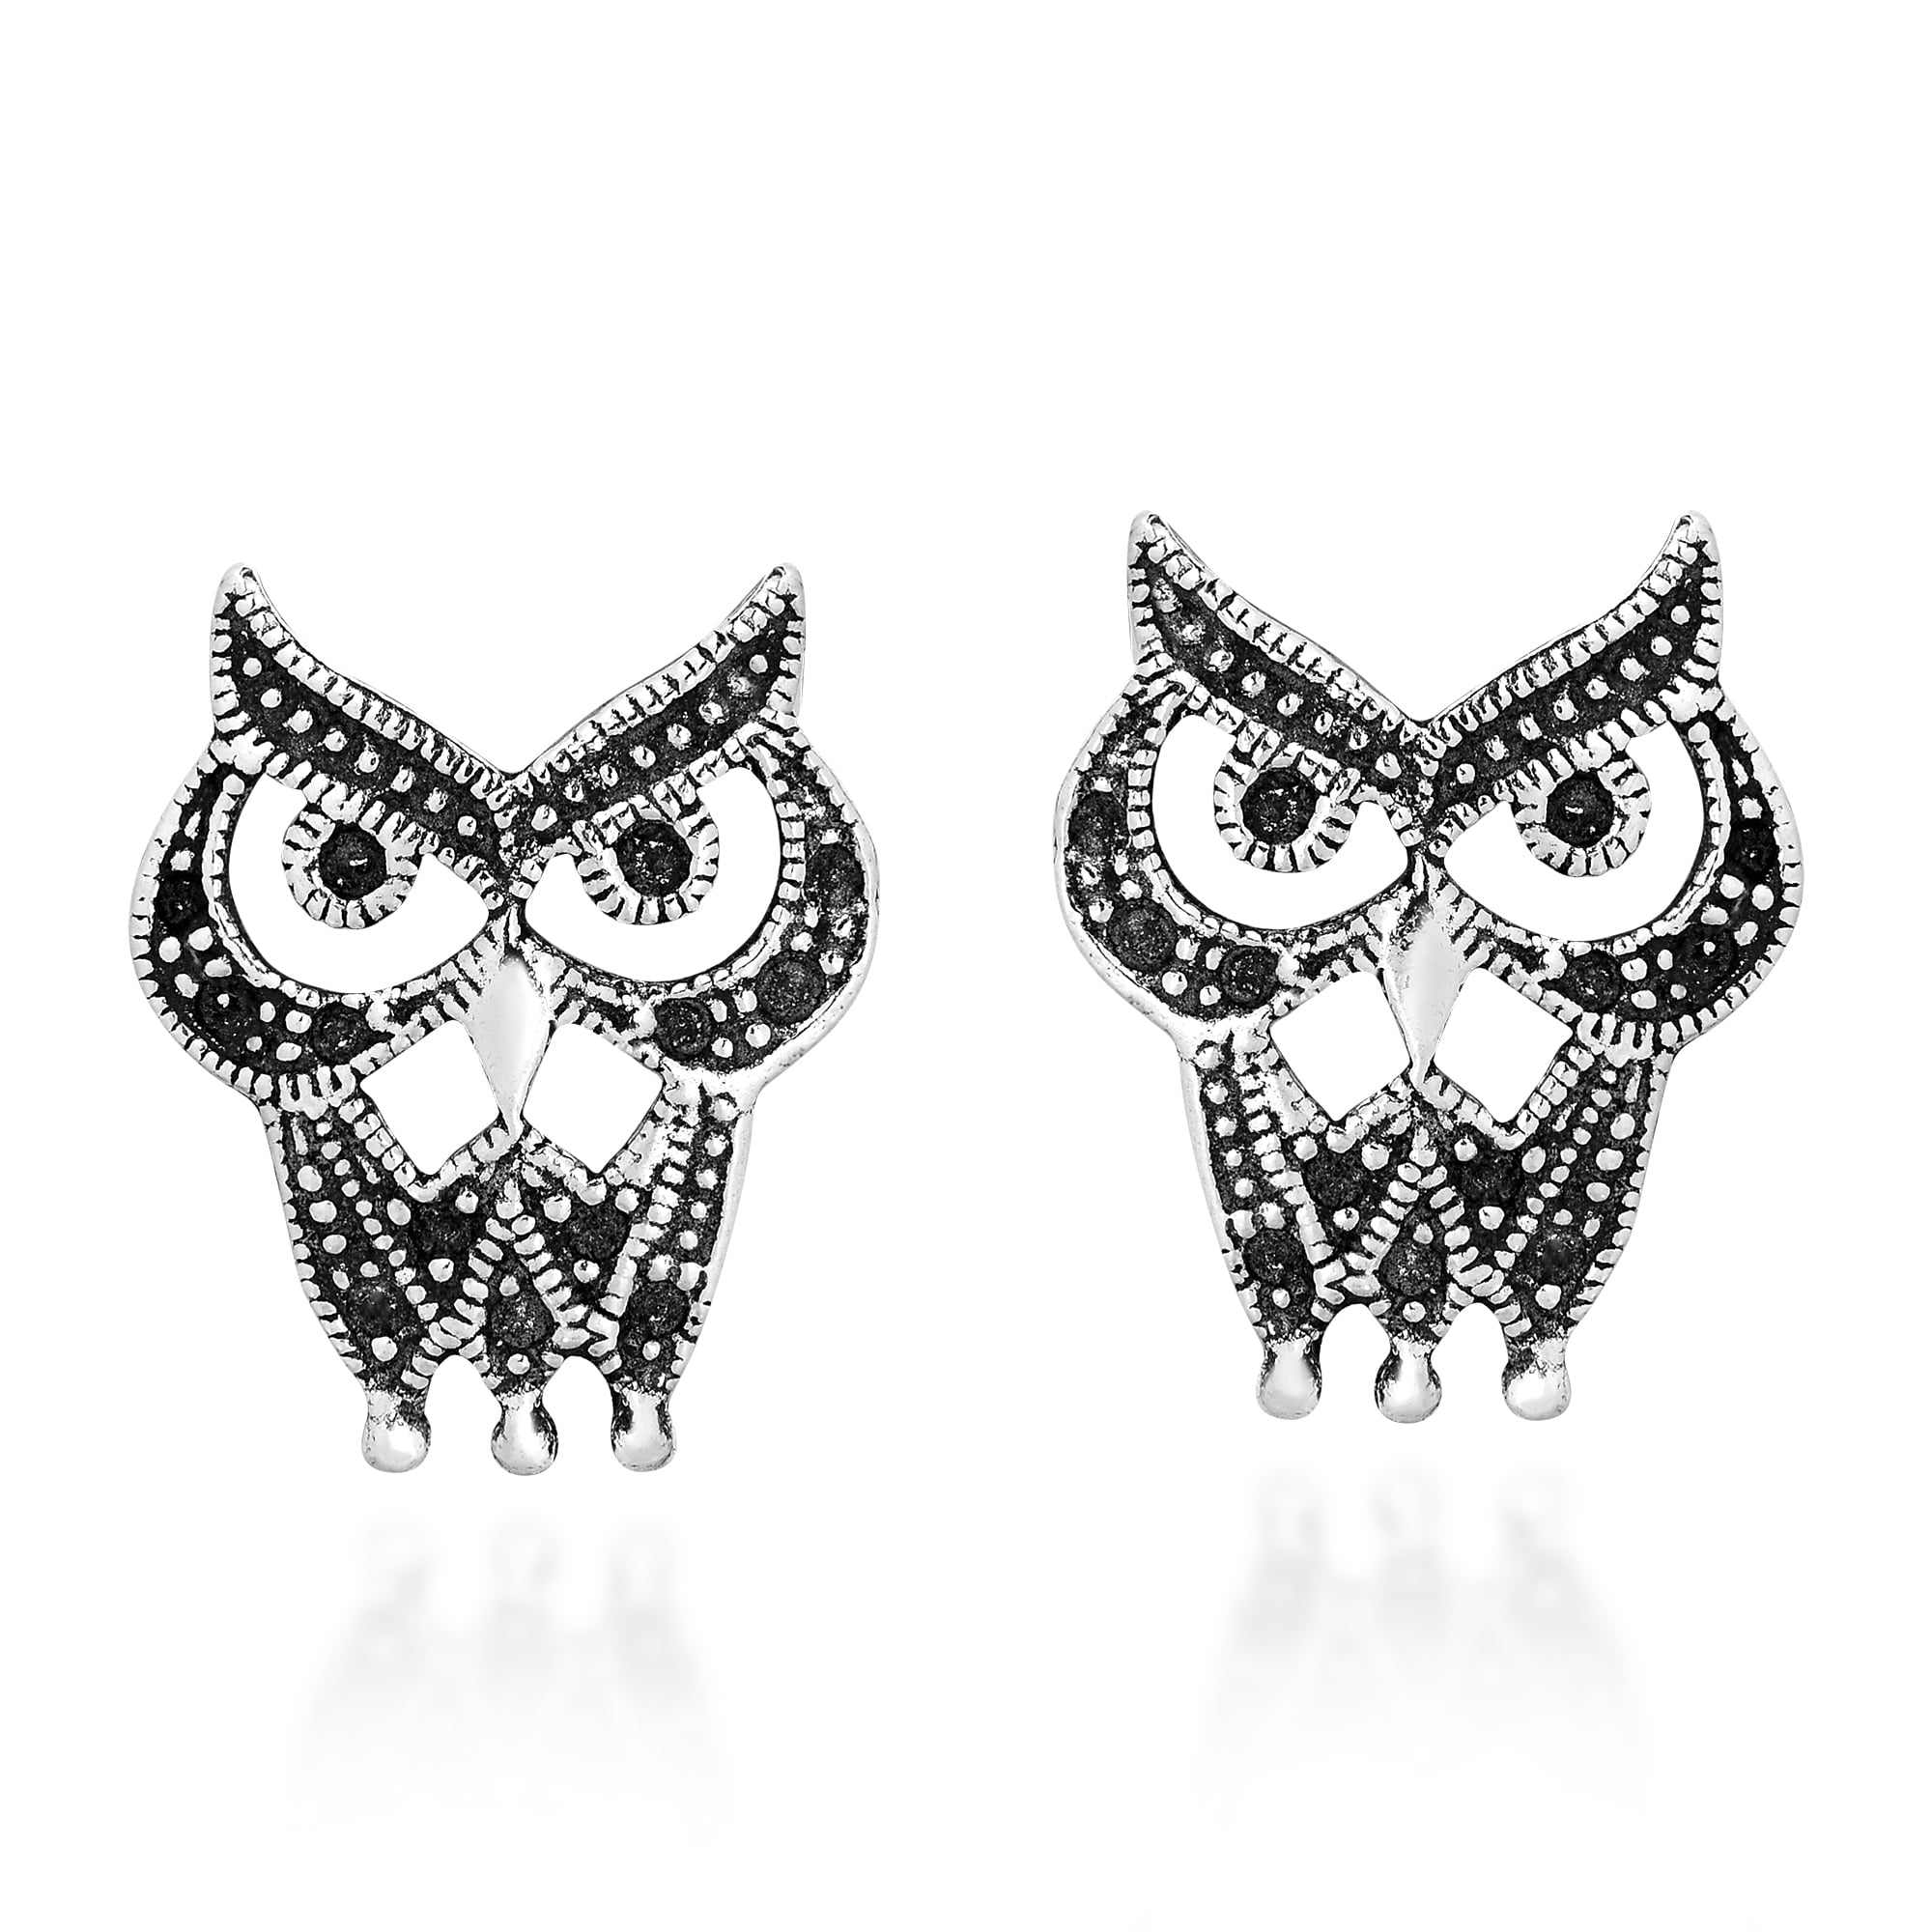 925 Sterling Silver Rose Gold OWL Stud Earrings & Gift Box